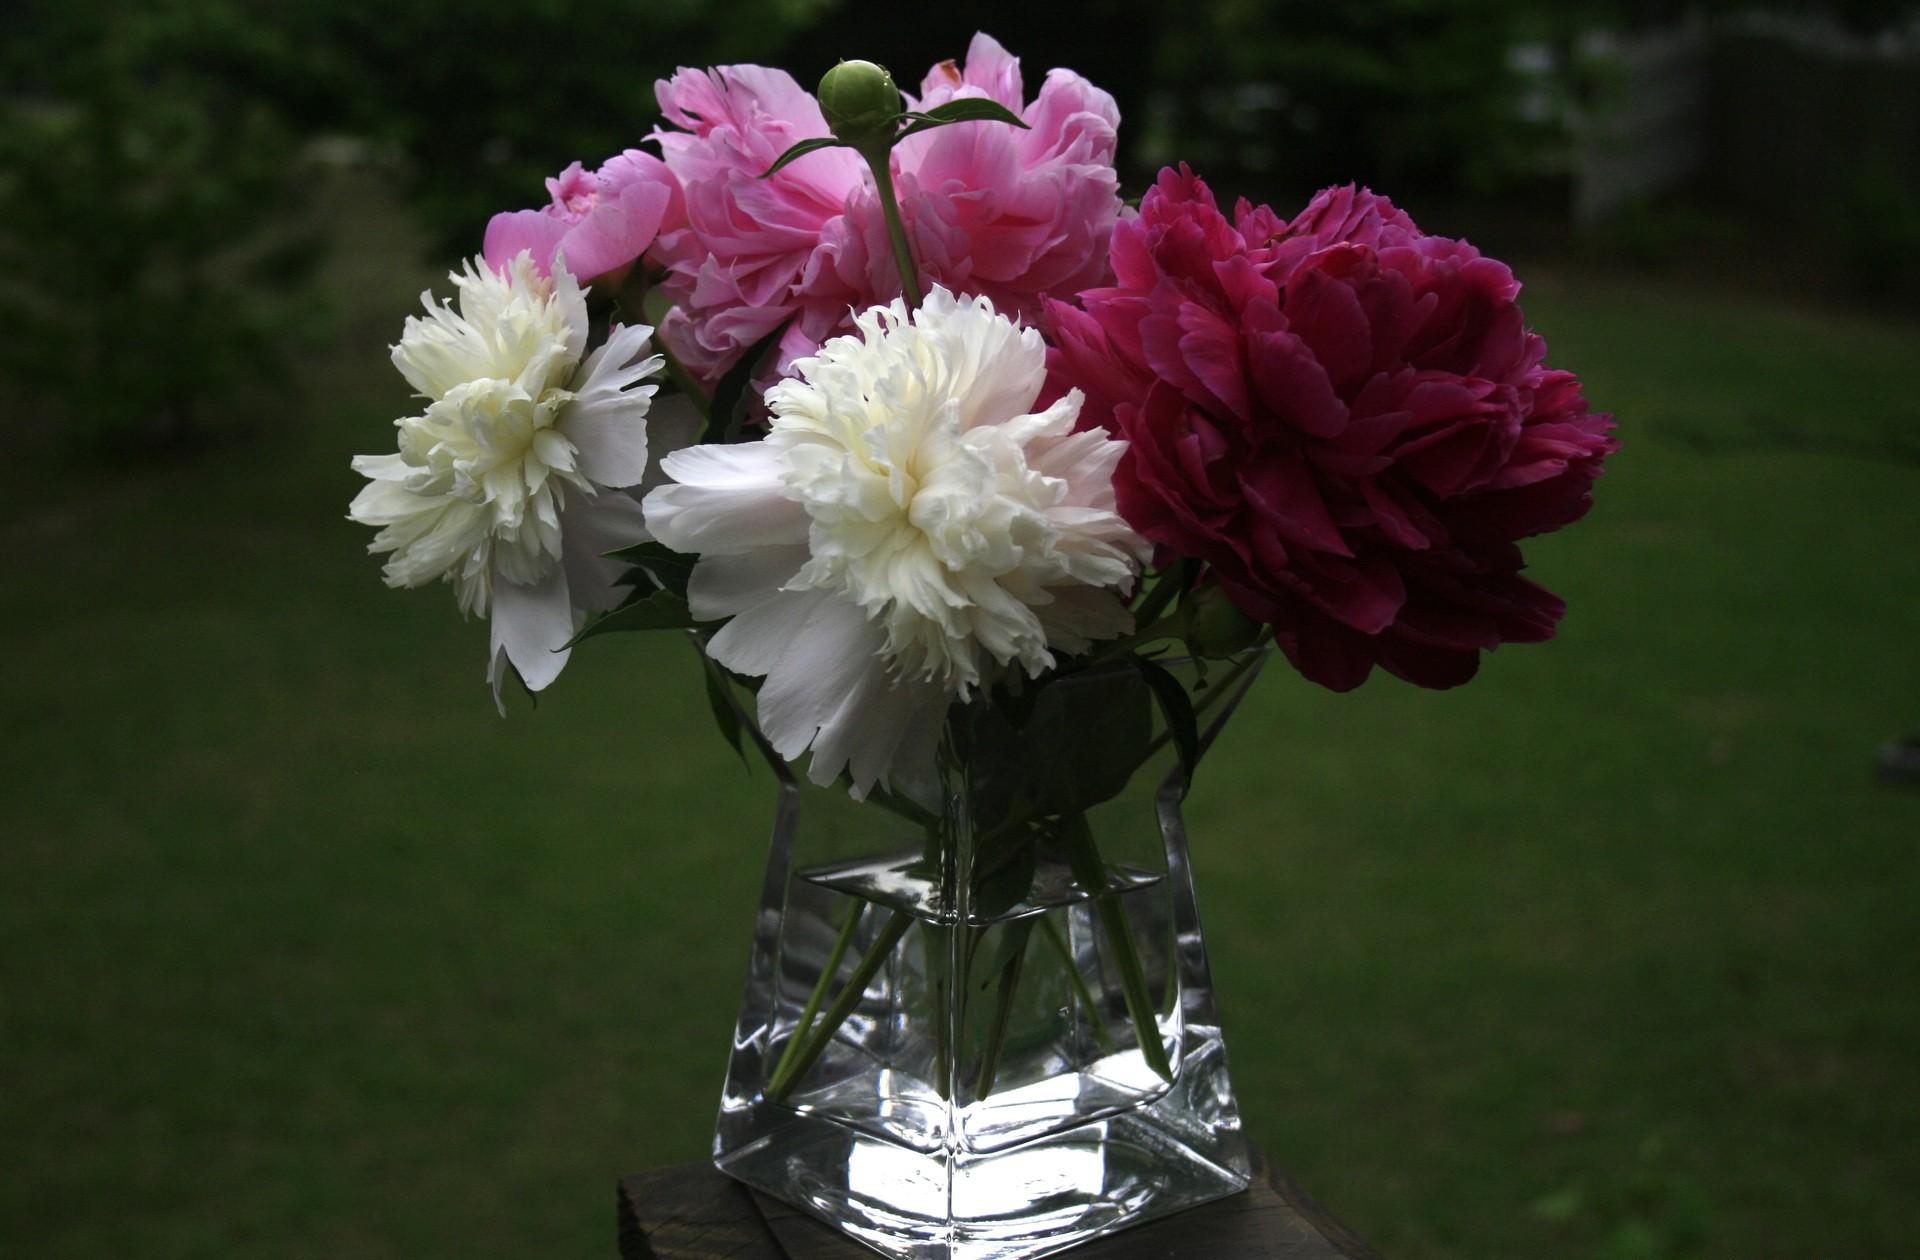 Vase bouquet, peonies, flowers, close-up Free Stock Photos